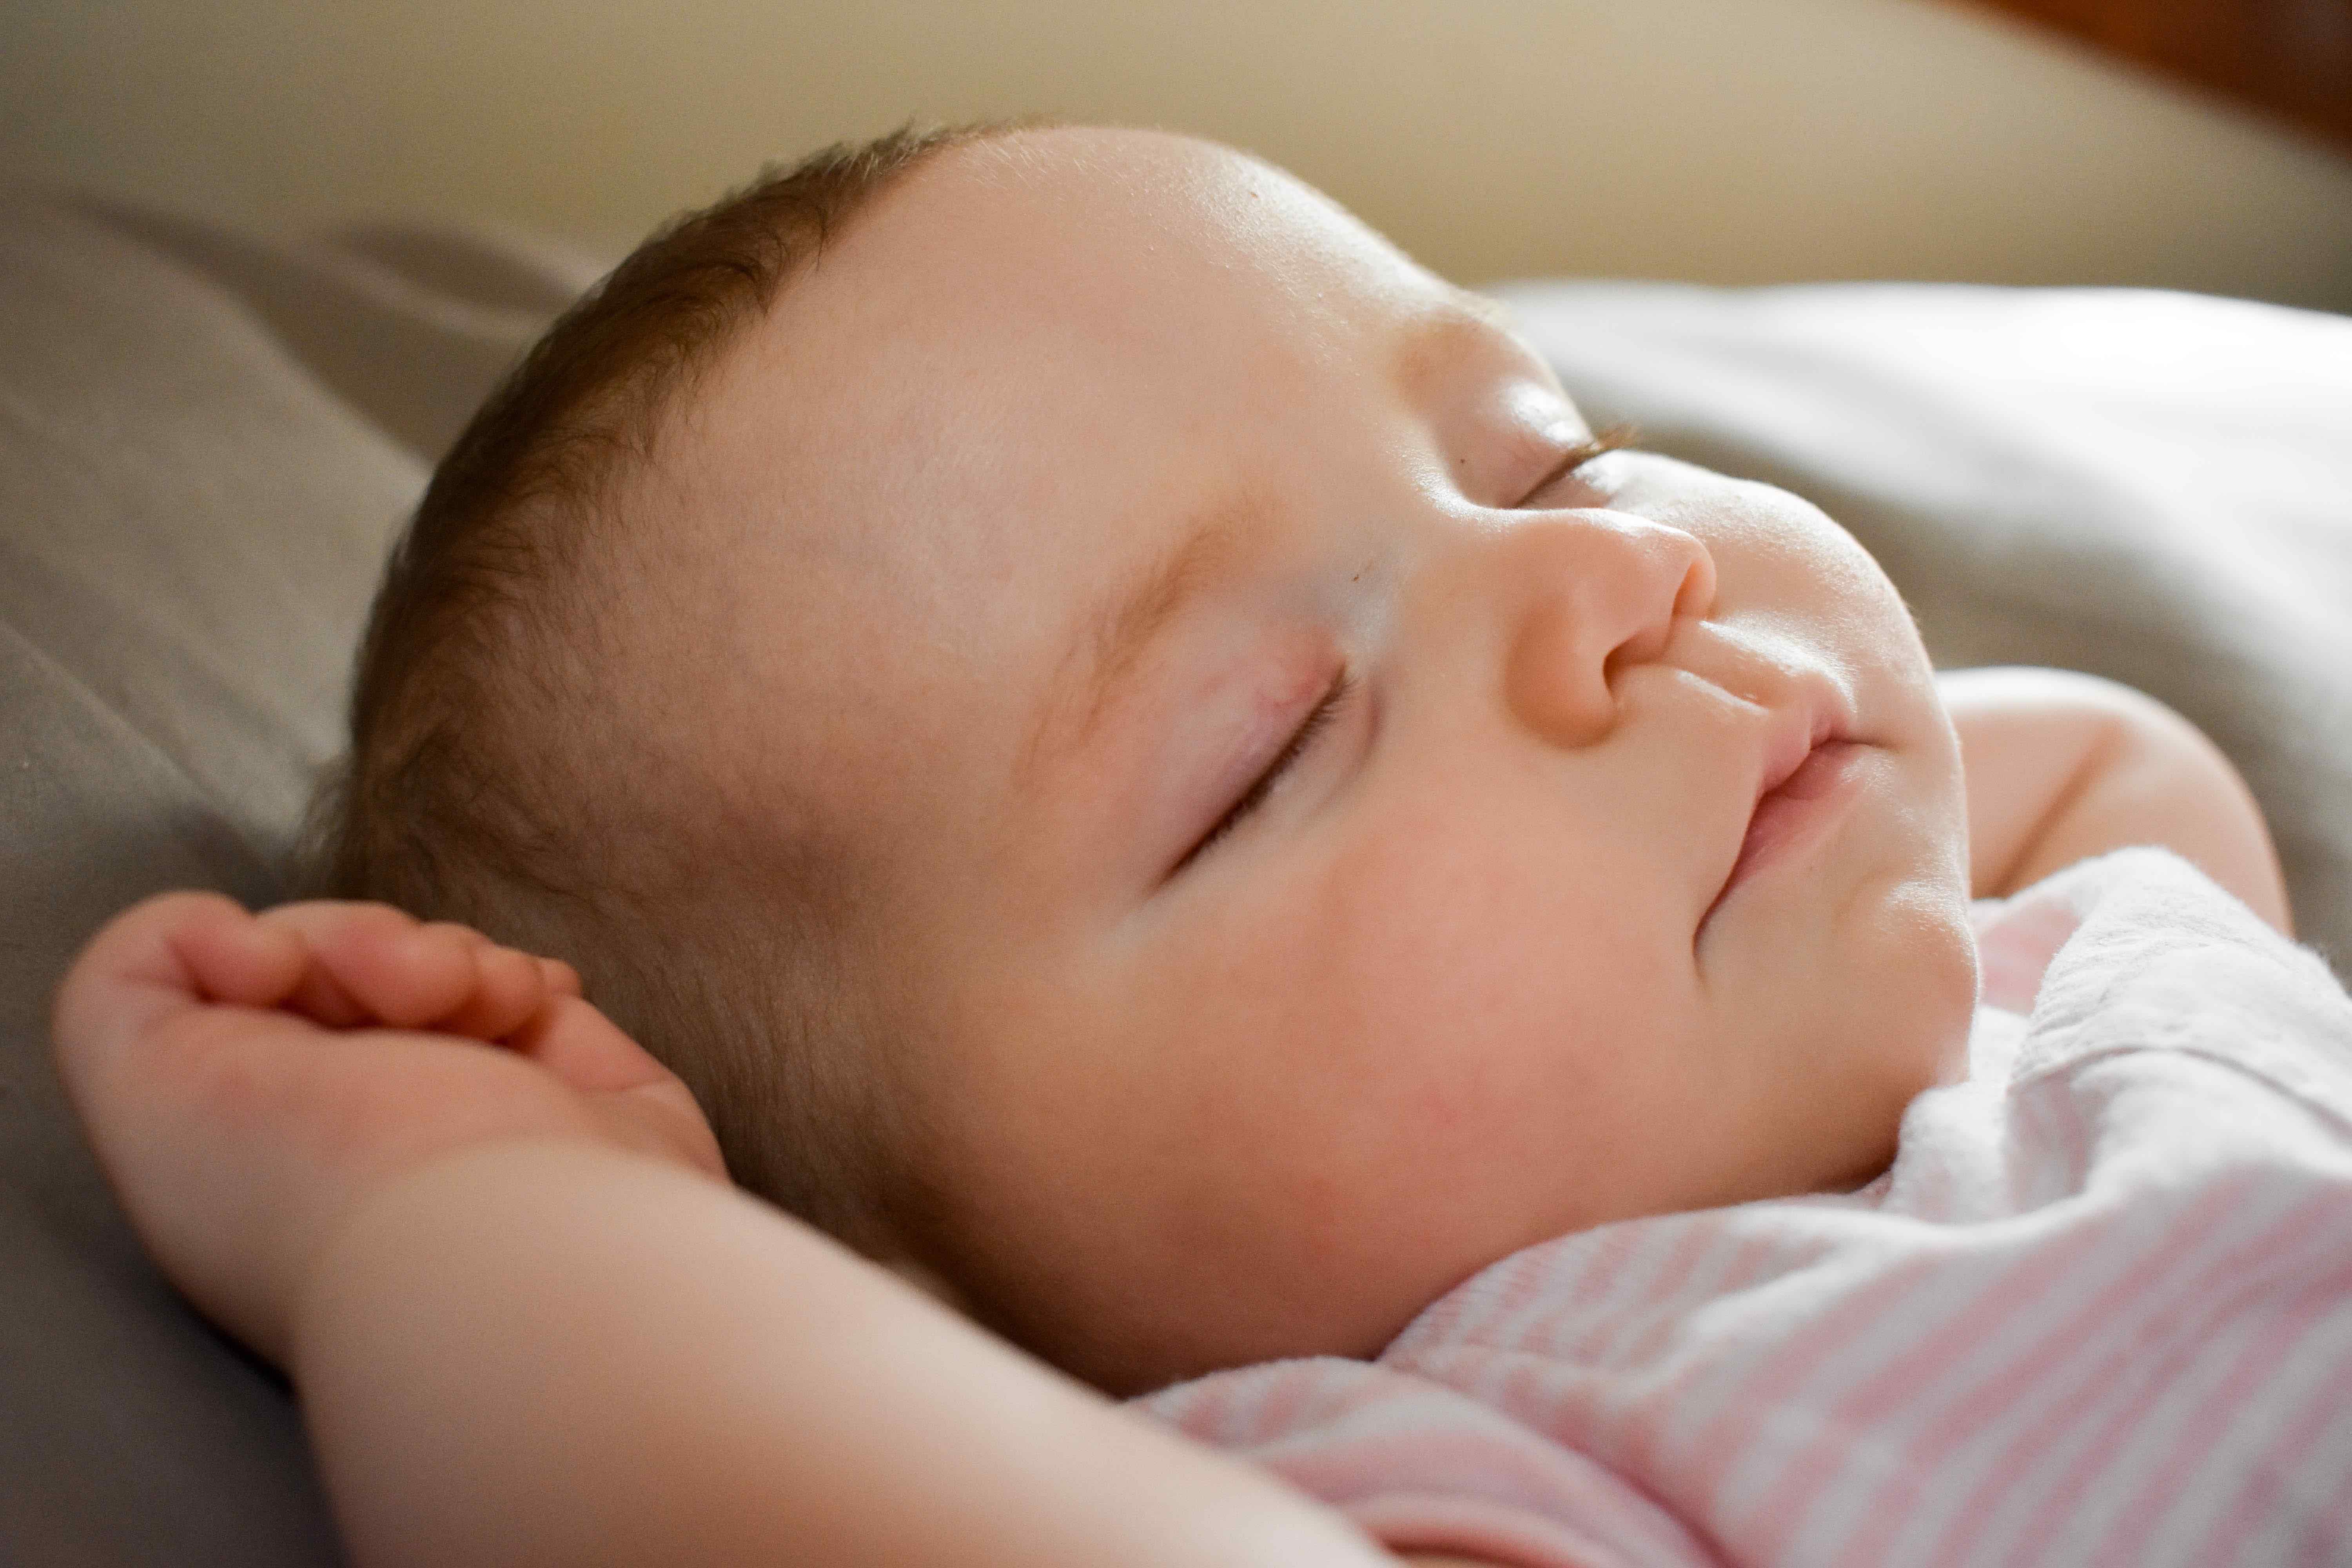 Top tips for managing sleep at nursery